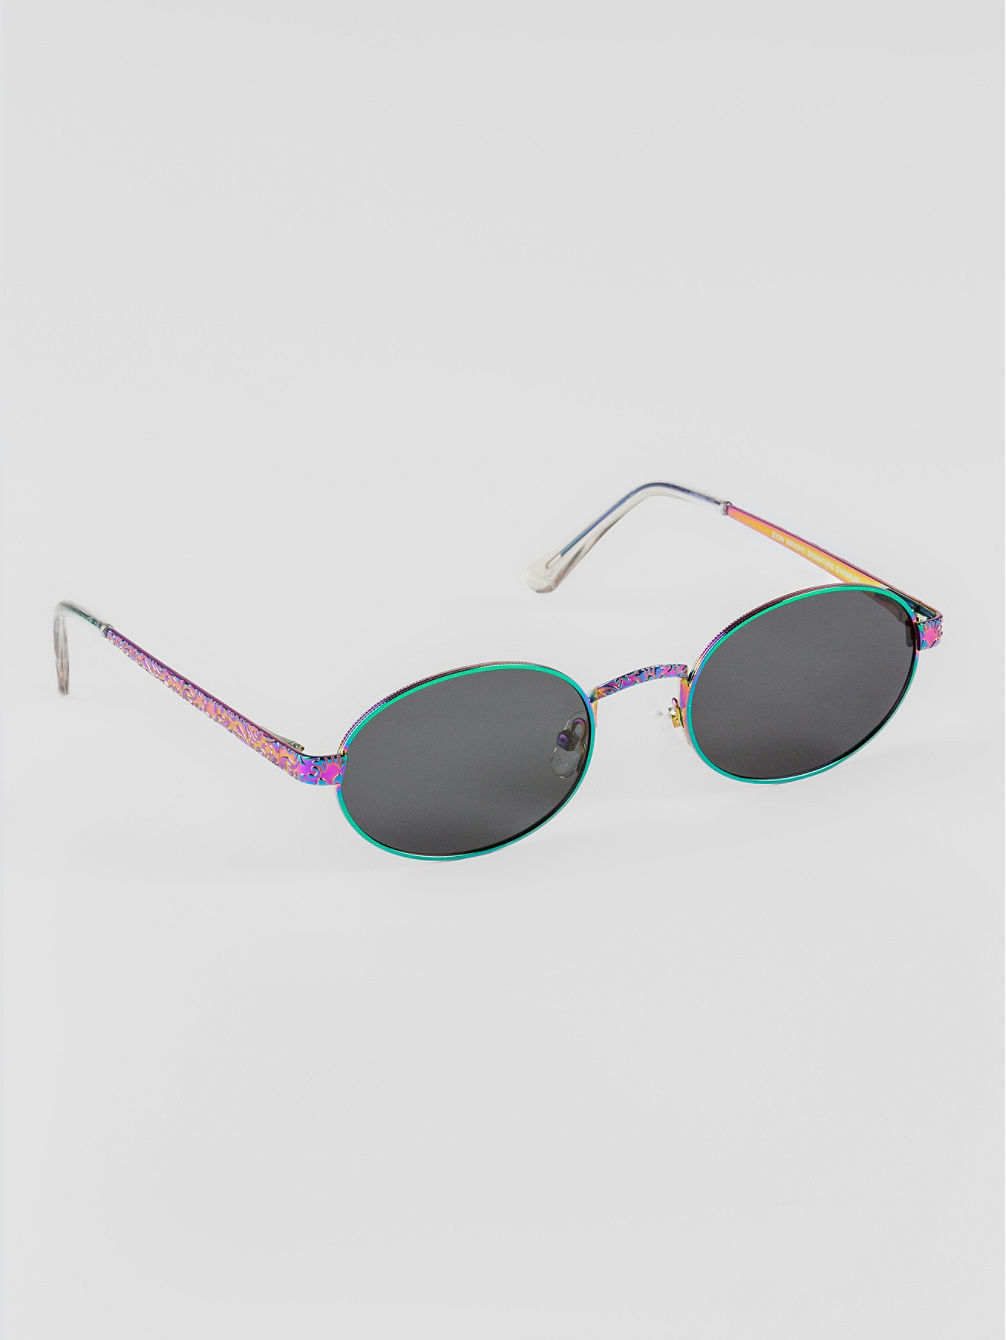 Zion Premium Polarized Sonnenbrille